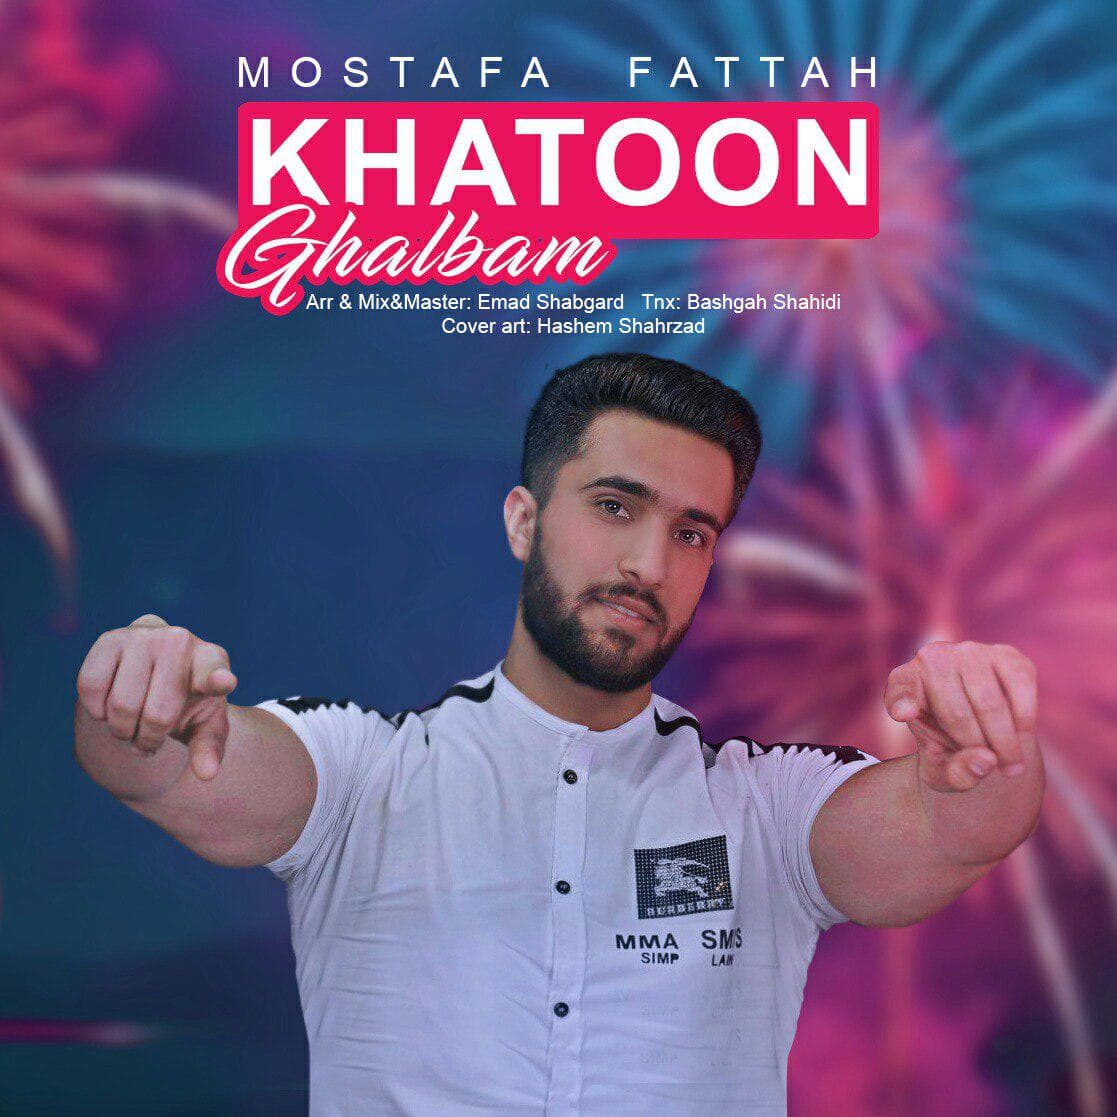 Mostafa Fatah Khatoon Ghalbam 